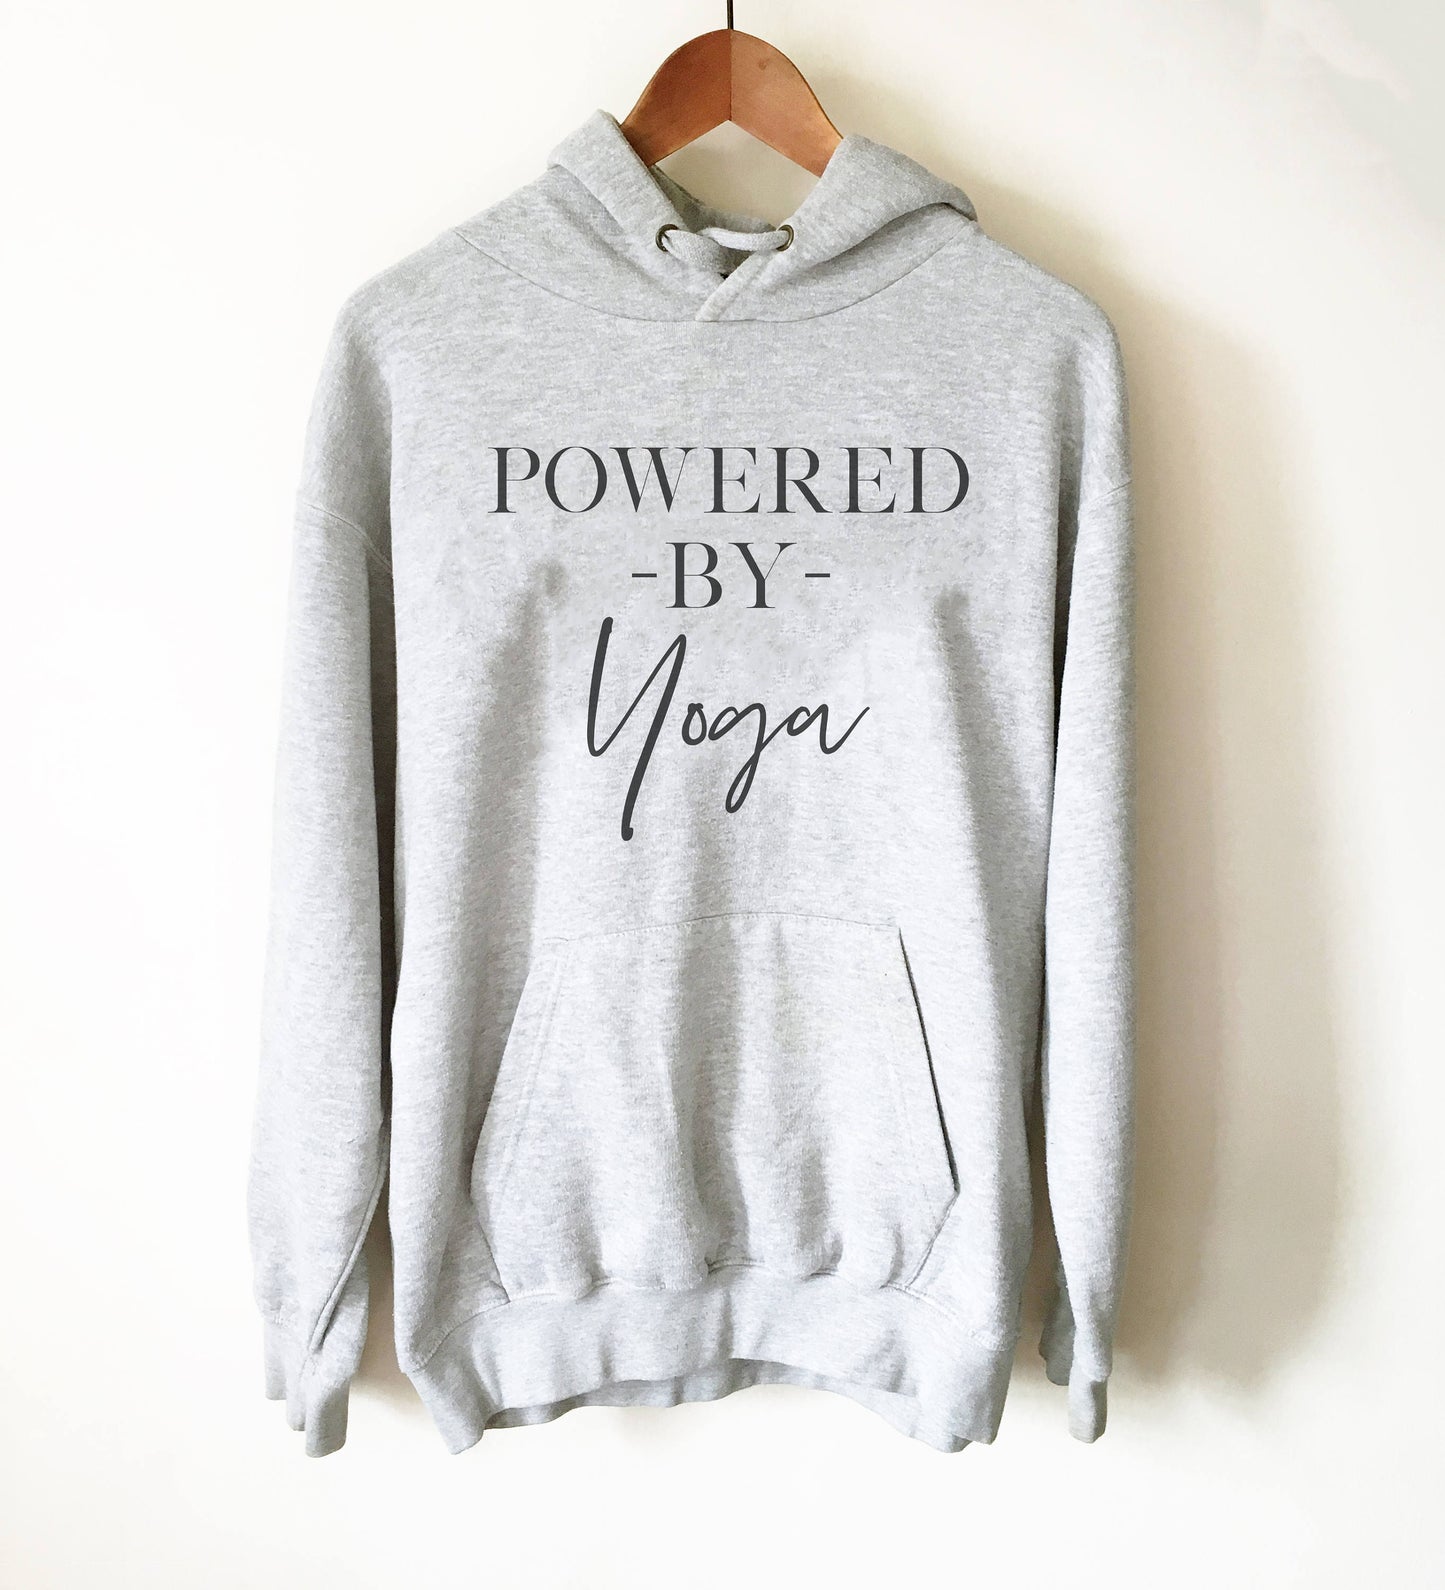 Powered By Yoga Hoodie - Yoga Shirt, Zen Yoga Clothing, Yoga Workout Clothes, Yoga Wear, Yoga Clothes, Yoga T Shirts Funny